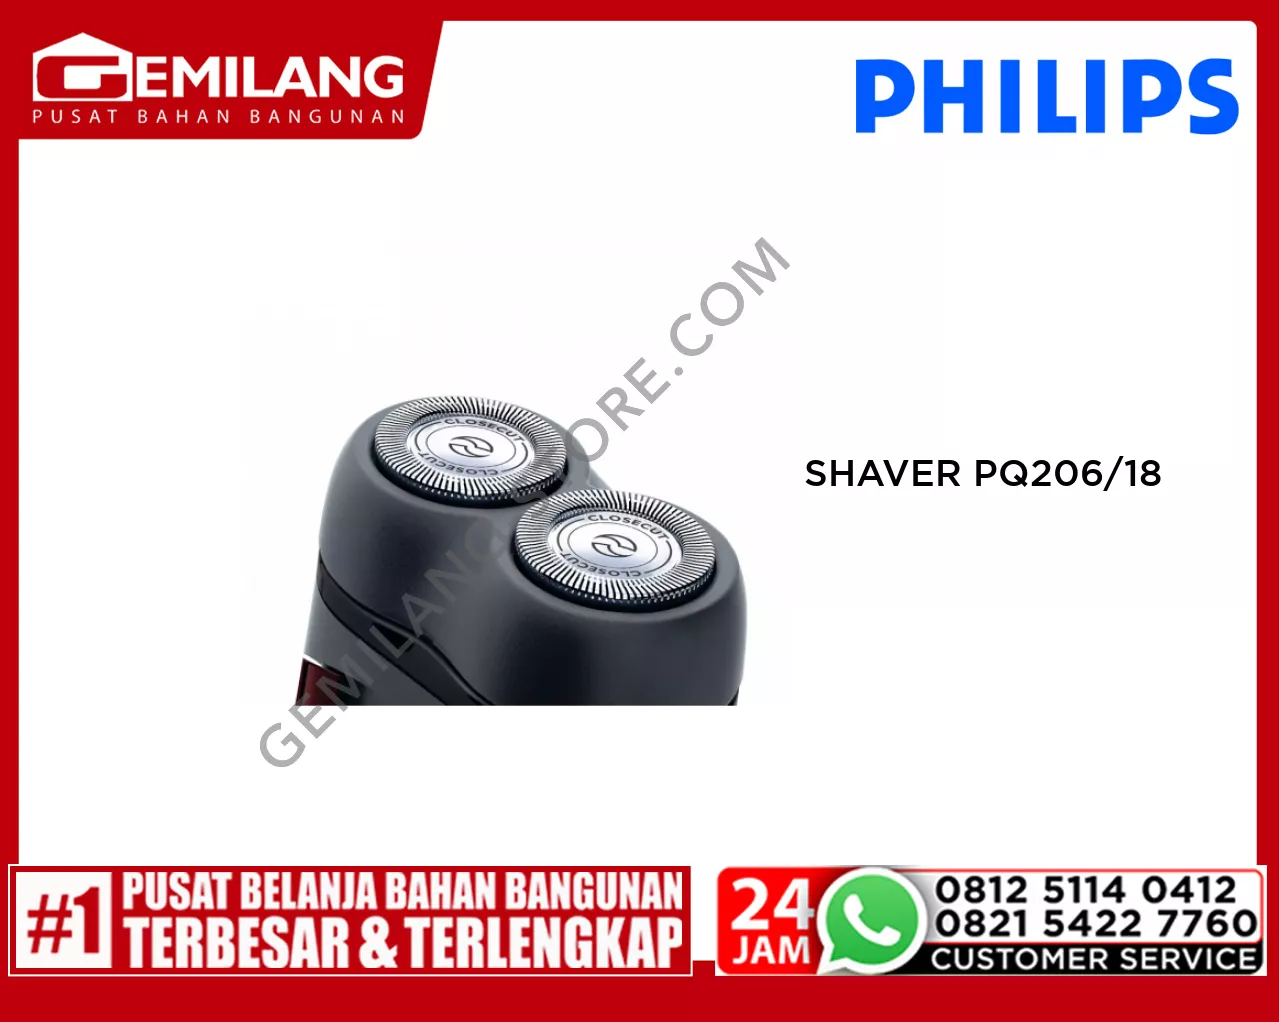 PHILIPS SHAVER PQ-206/18